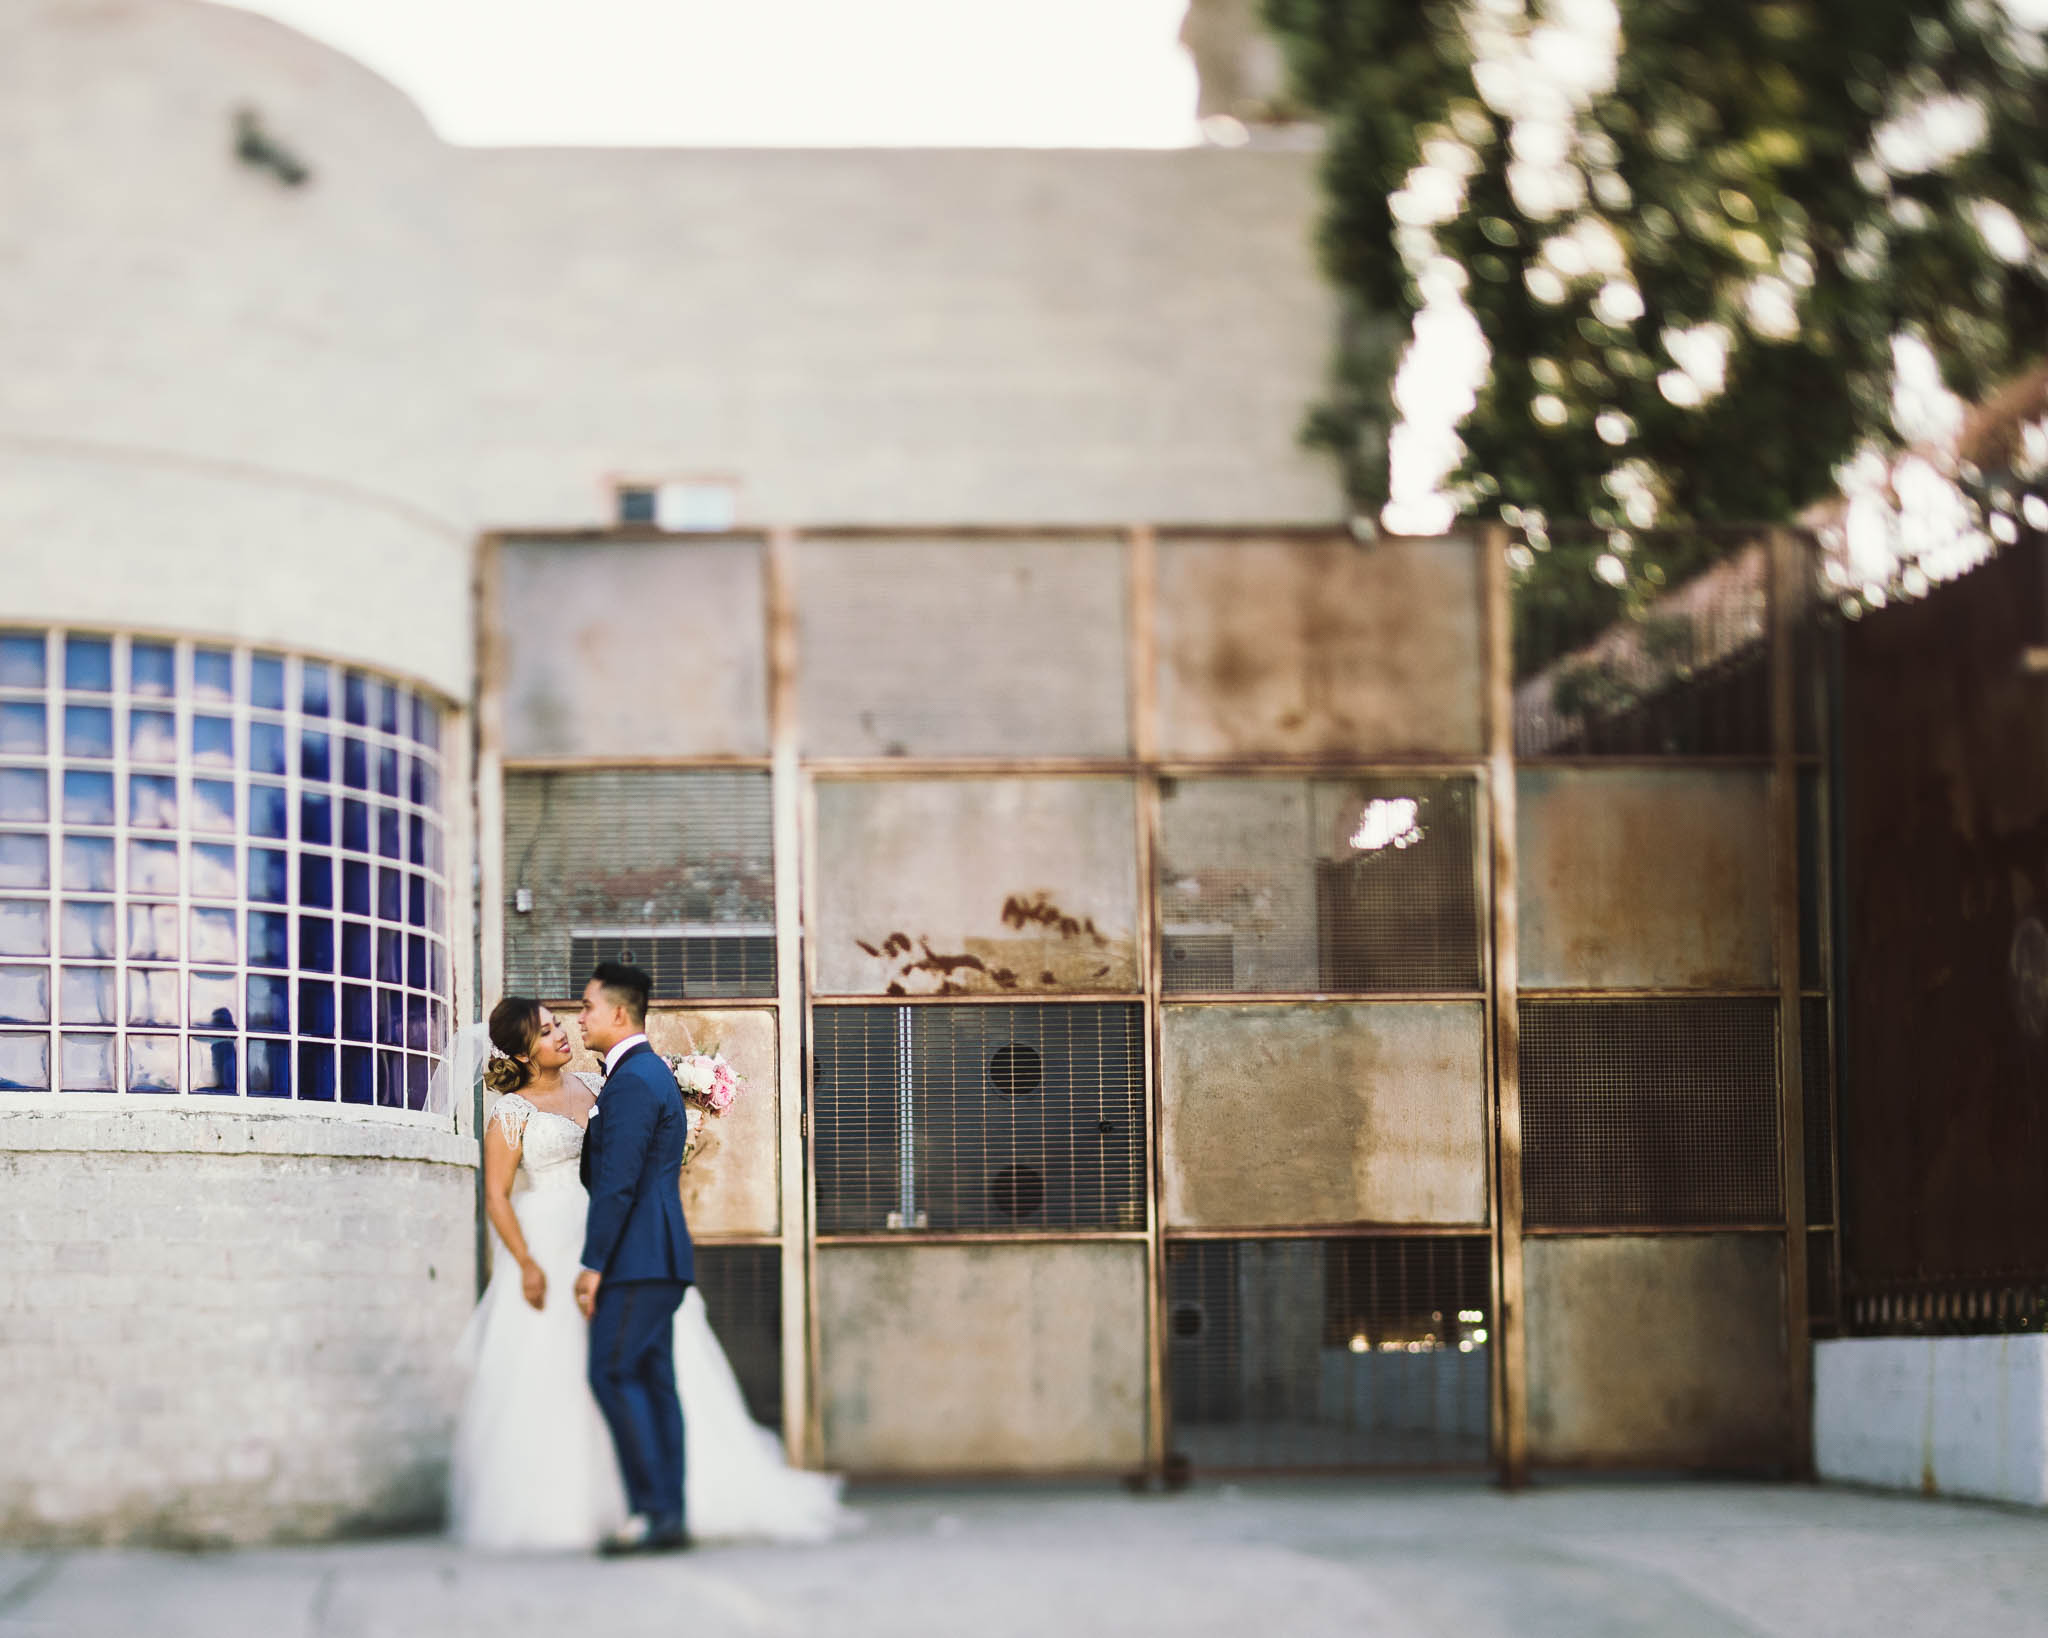 ©Isaiah & Taylor Photography - Los Angeles Wedding Photographer - Lot 613 Warehouse Space-38.jpg